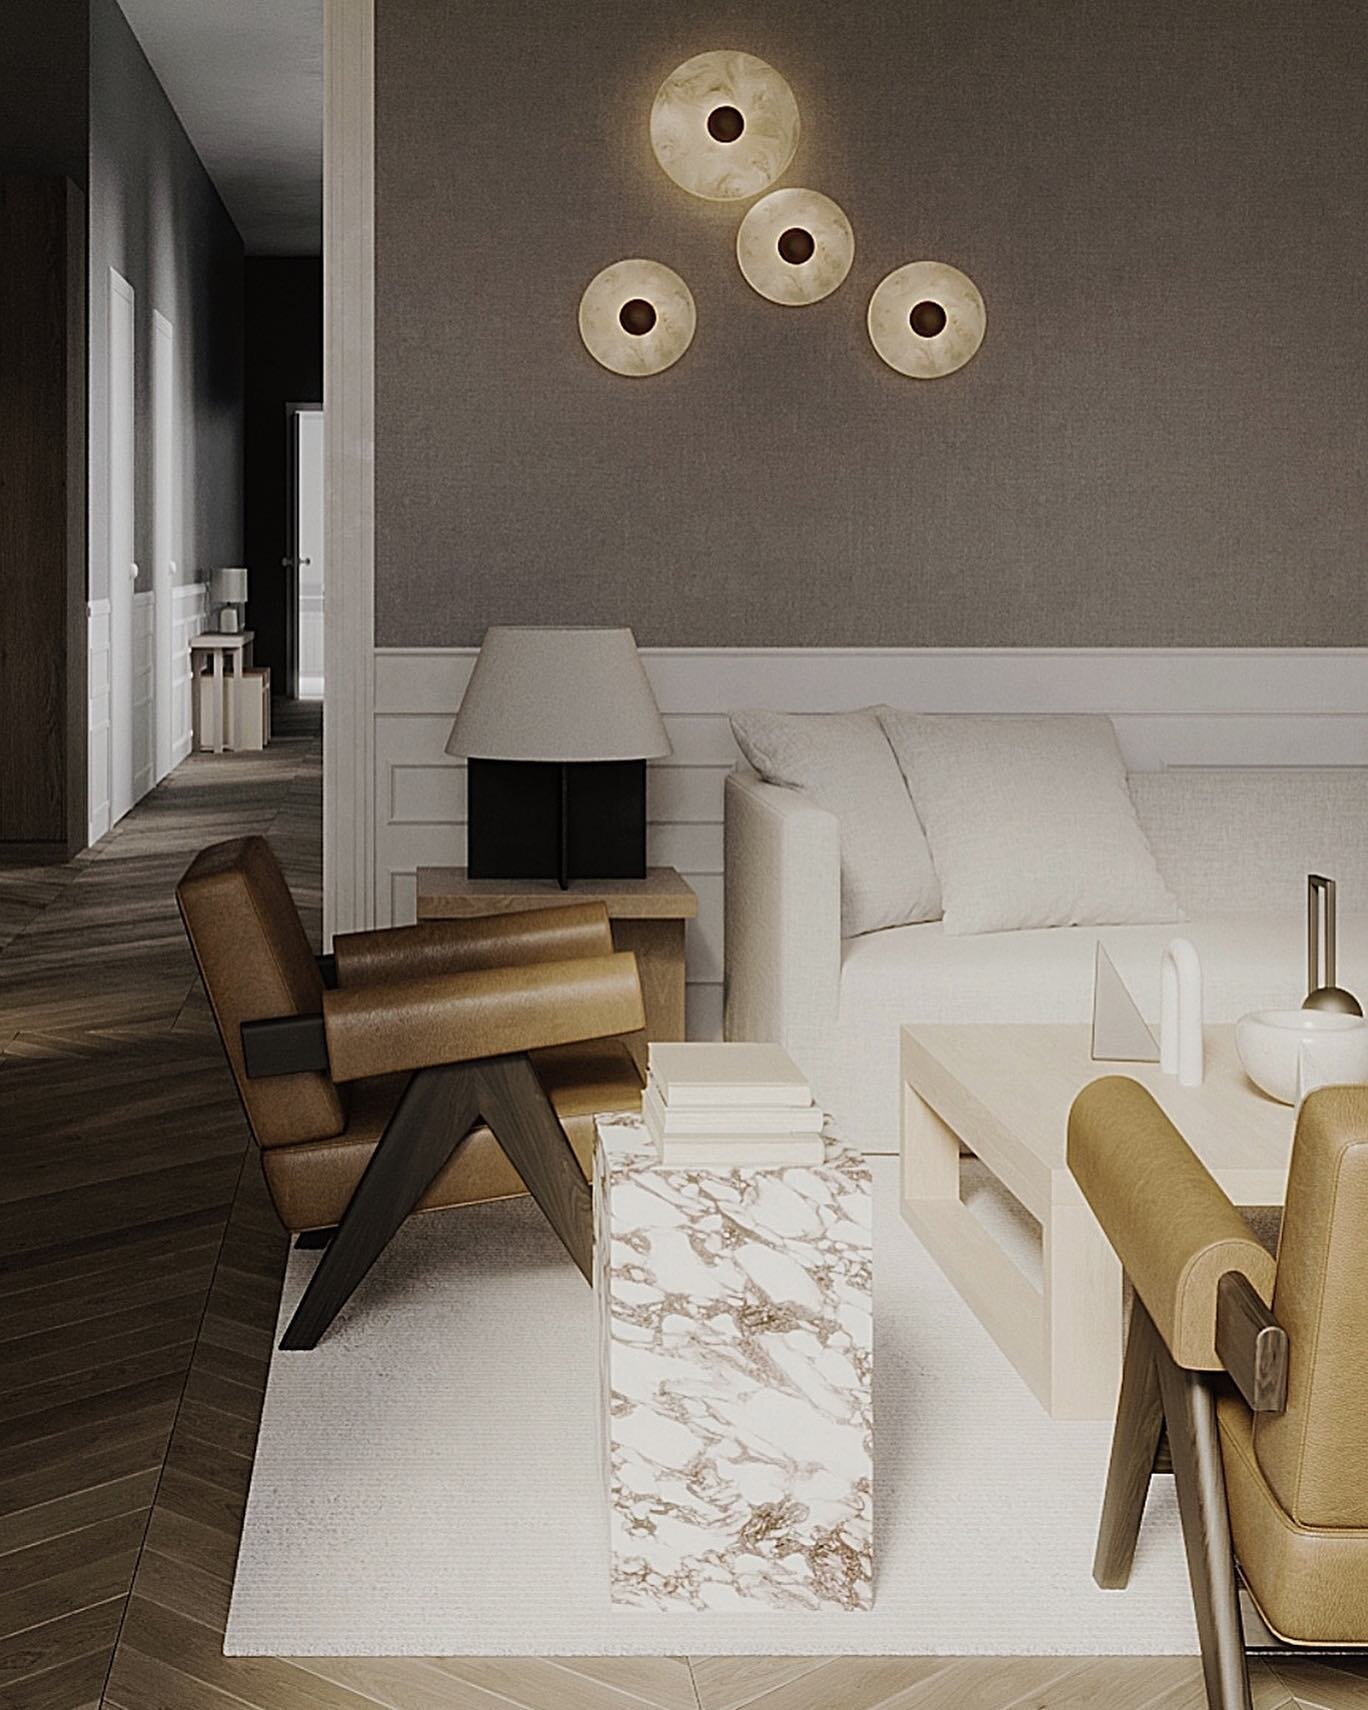 Alonso Martinez 
@marianarivera.s 
.
.
.
.
#interiordesign #interiorarchitecture #homestyle #homedesign #homeinteriors #madrid #mr #interior #interiors #livingroom #livingroomdesign